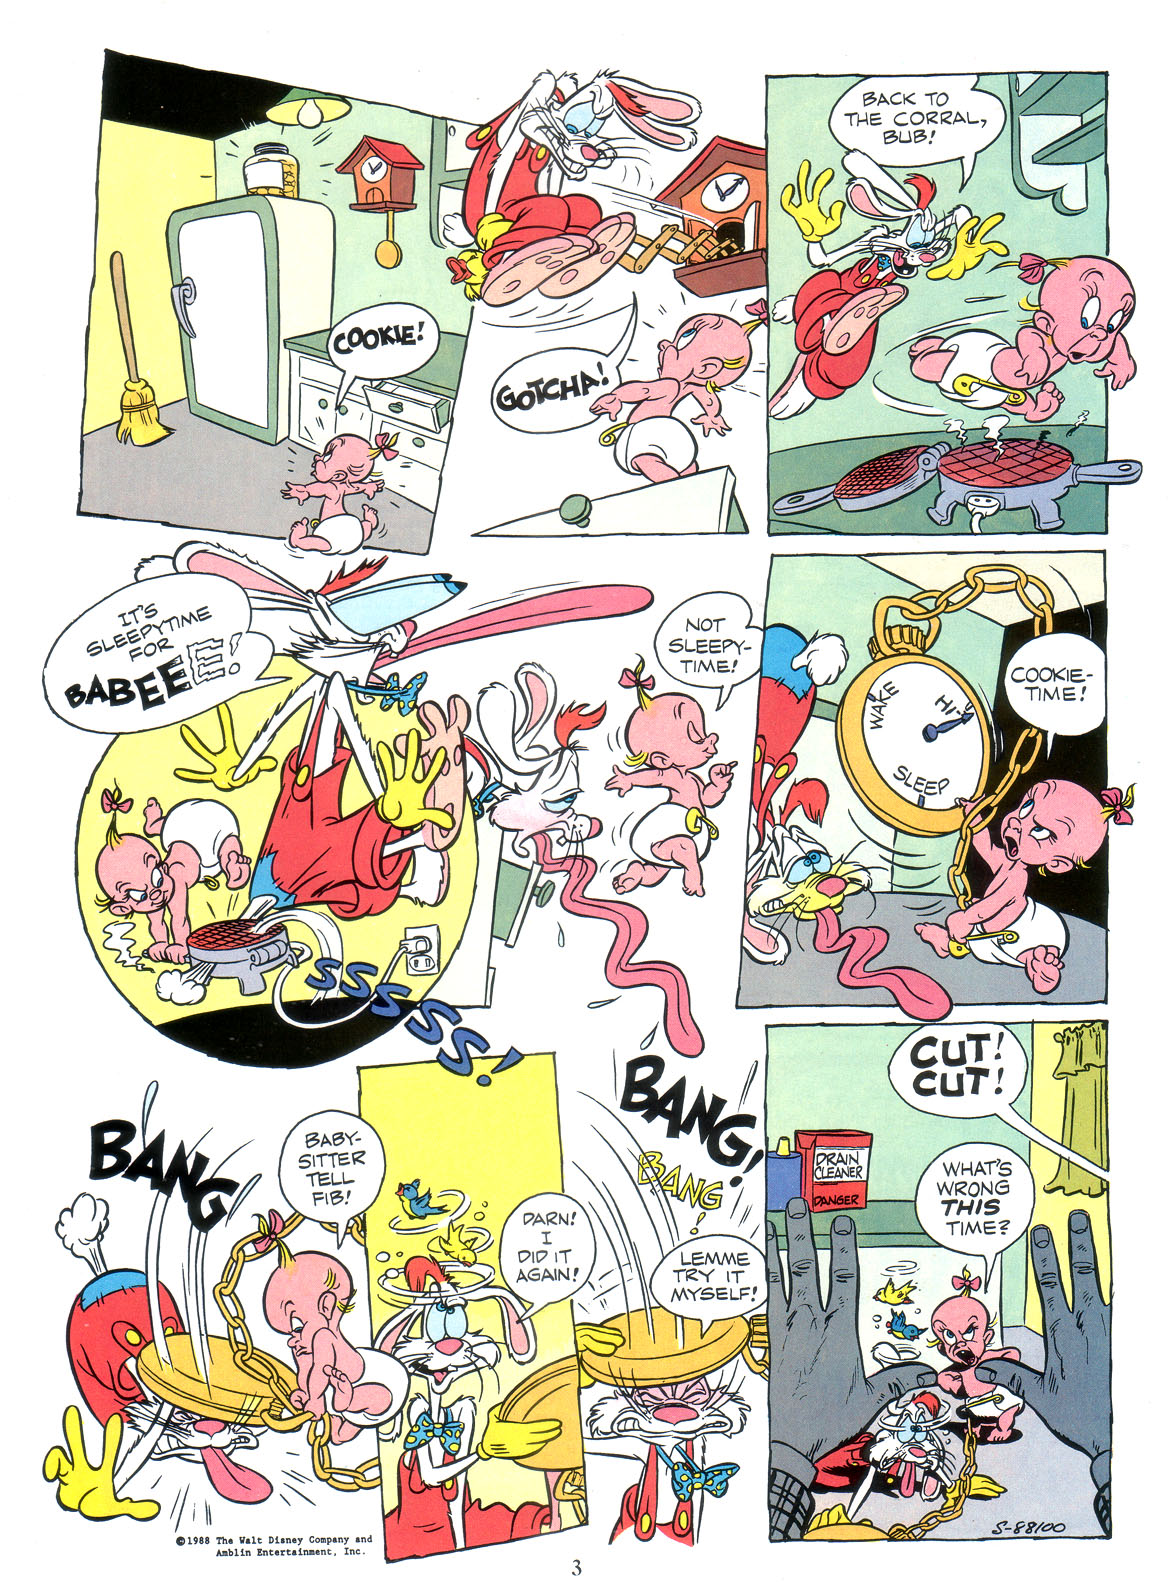 Marvel Graphic Novel issue 41 - Who Framed Roger Rabbit - Page 5